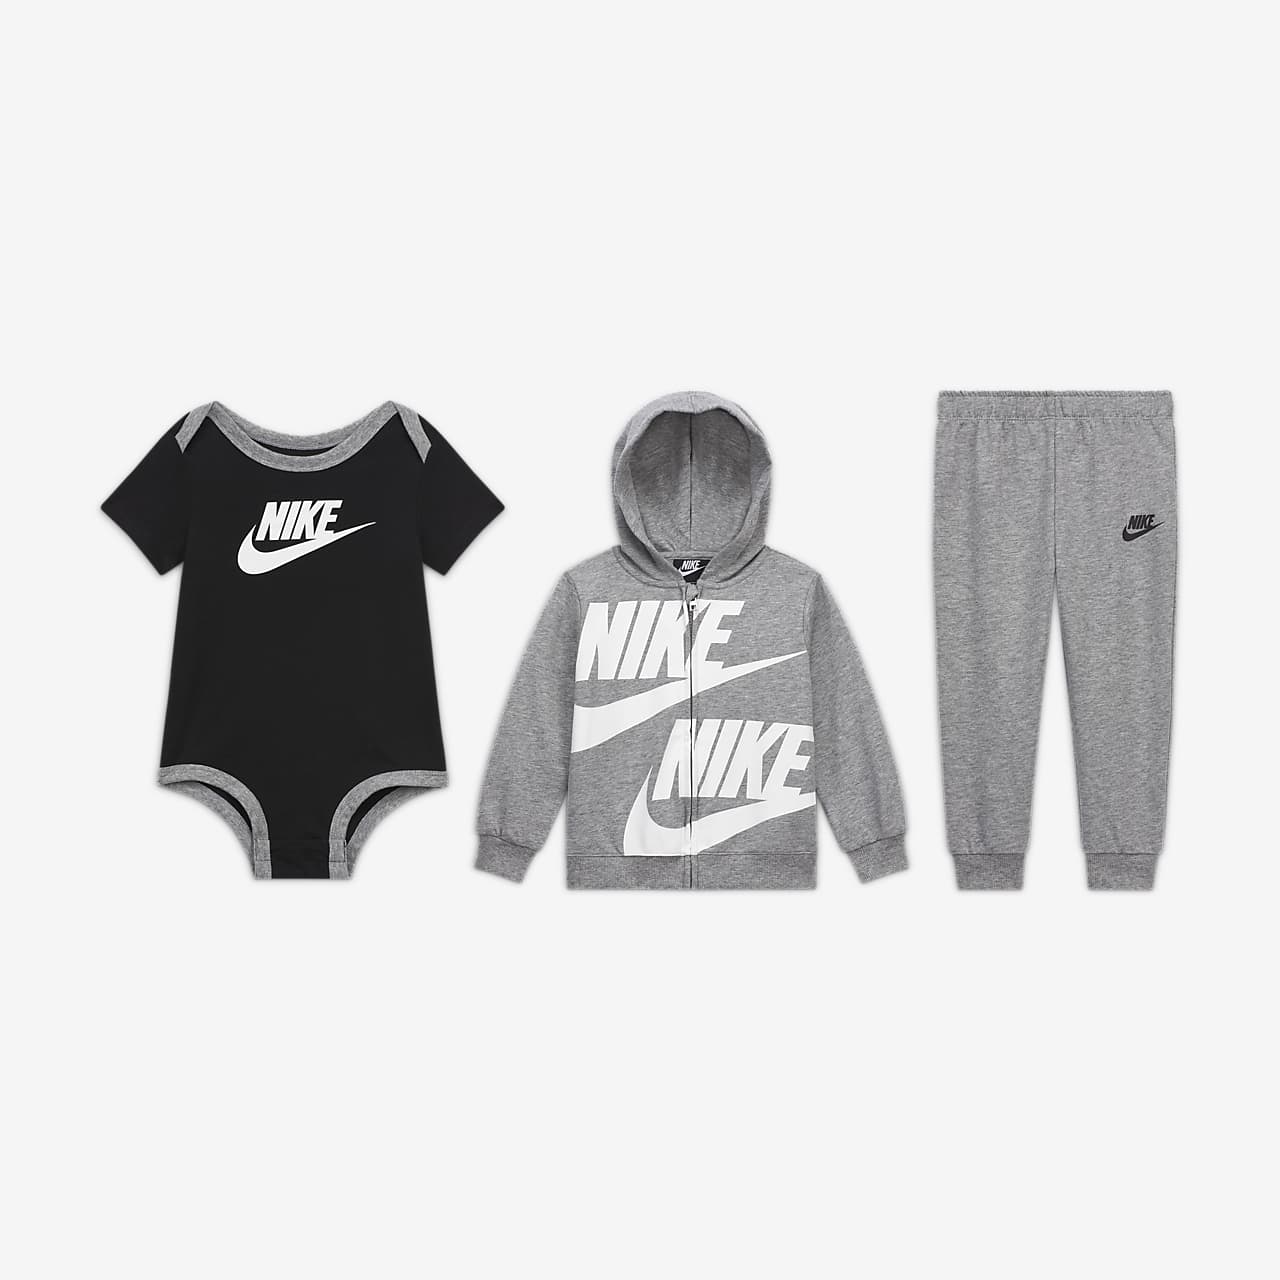 Nike Baby (12-24M) Bodysuit, Hoodie and 